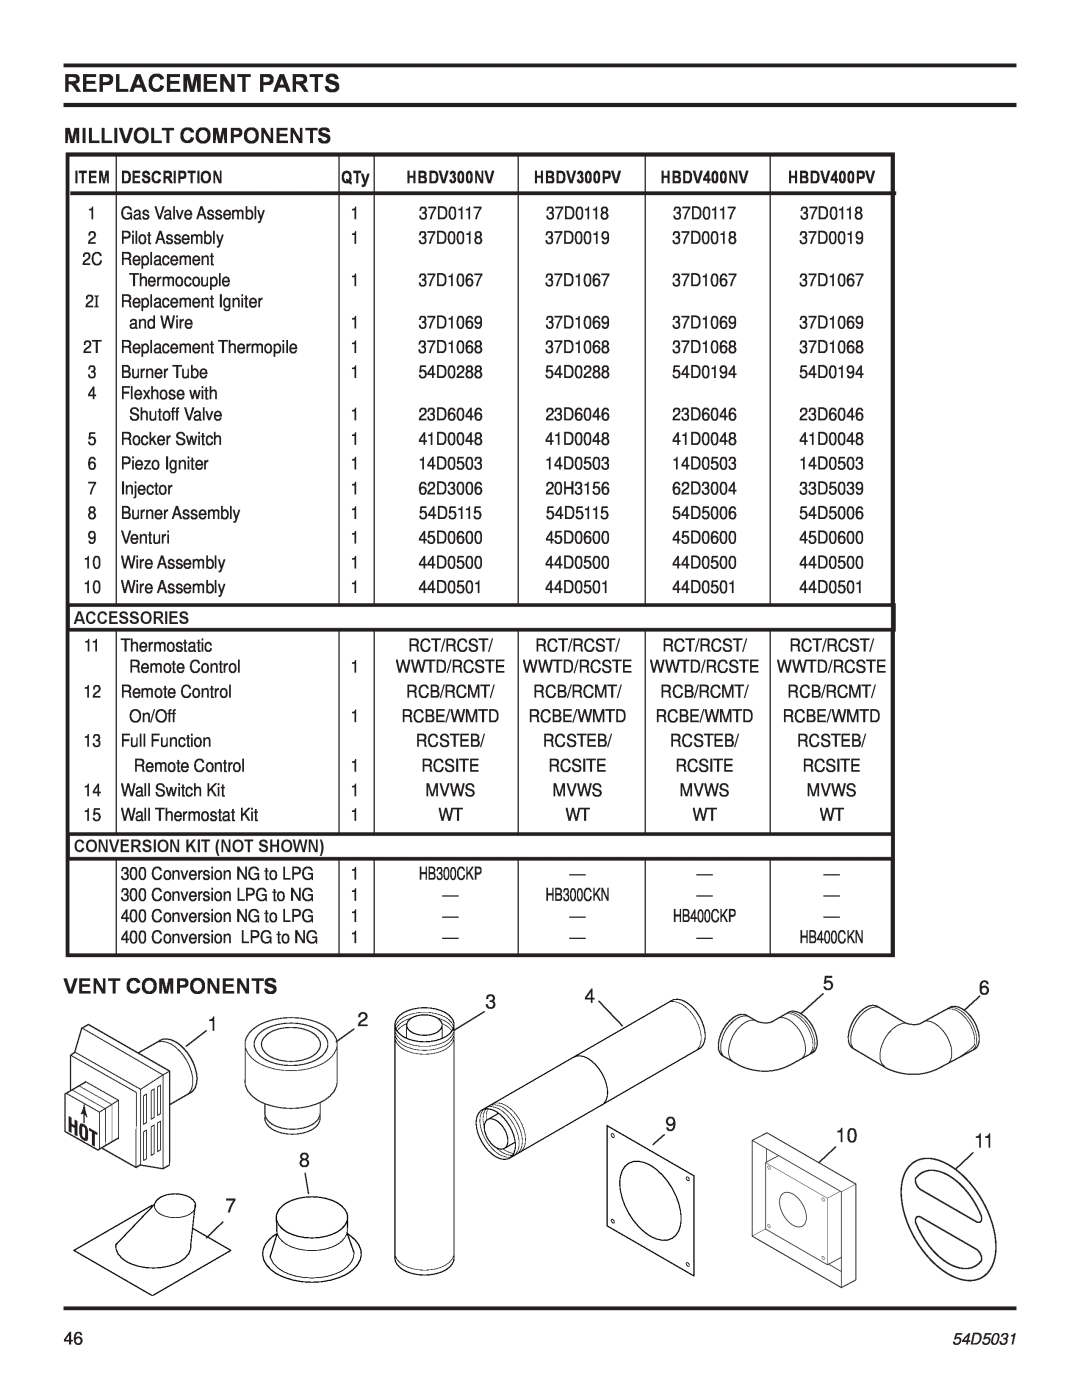 Monessen Hearth HBDV400 manual Millivolt Components, Replacement Parts, Vent Components, Description, HBDV300NV, HBDV300PV 